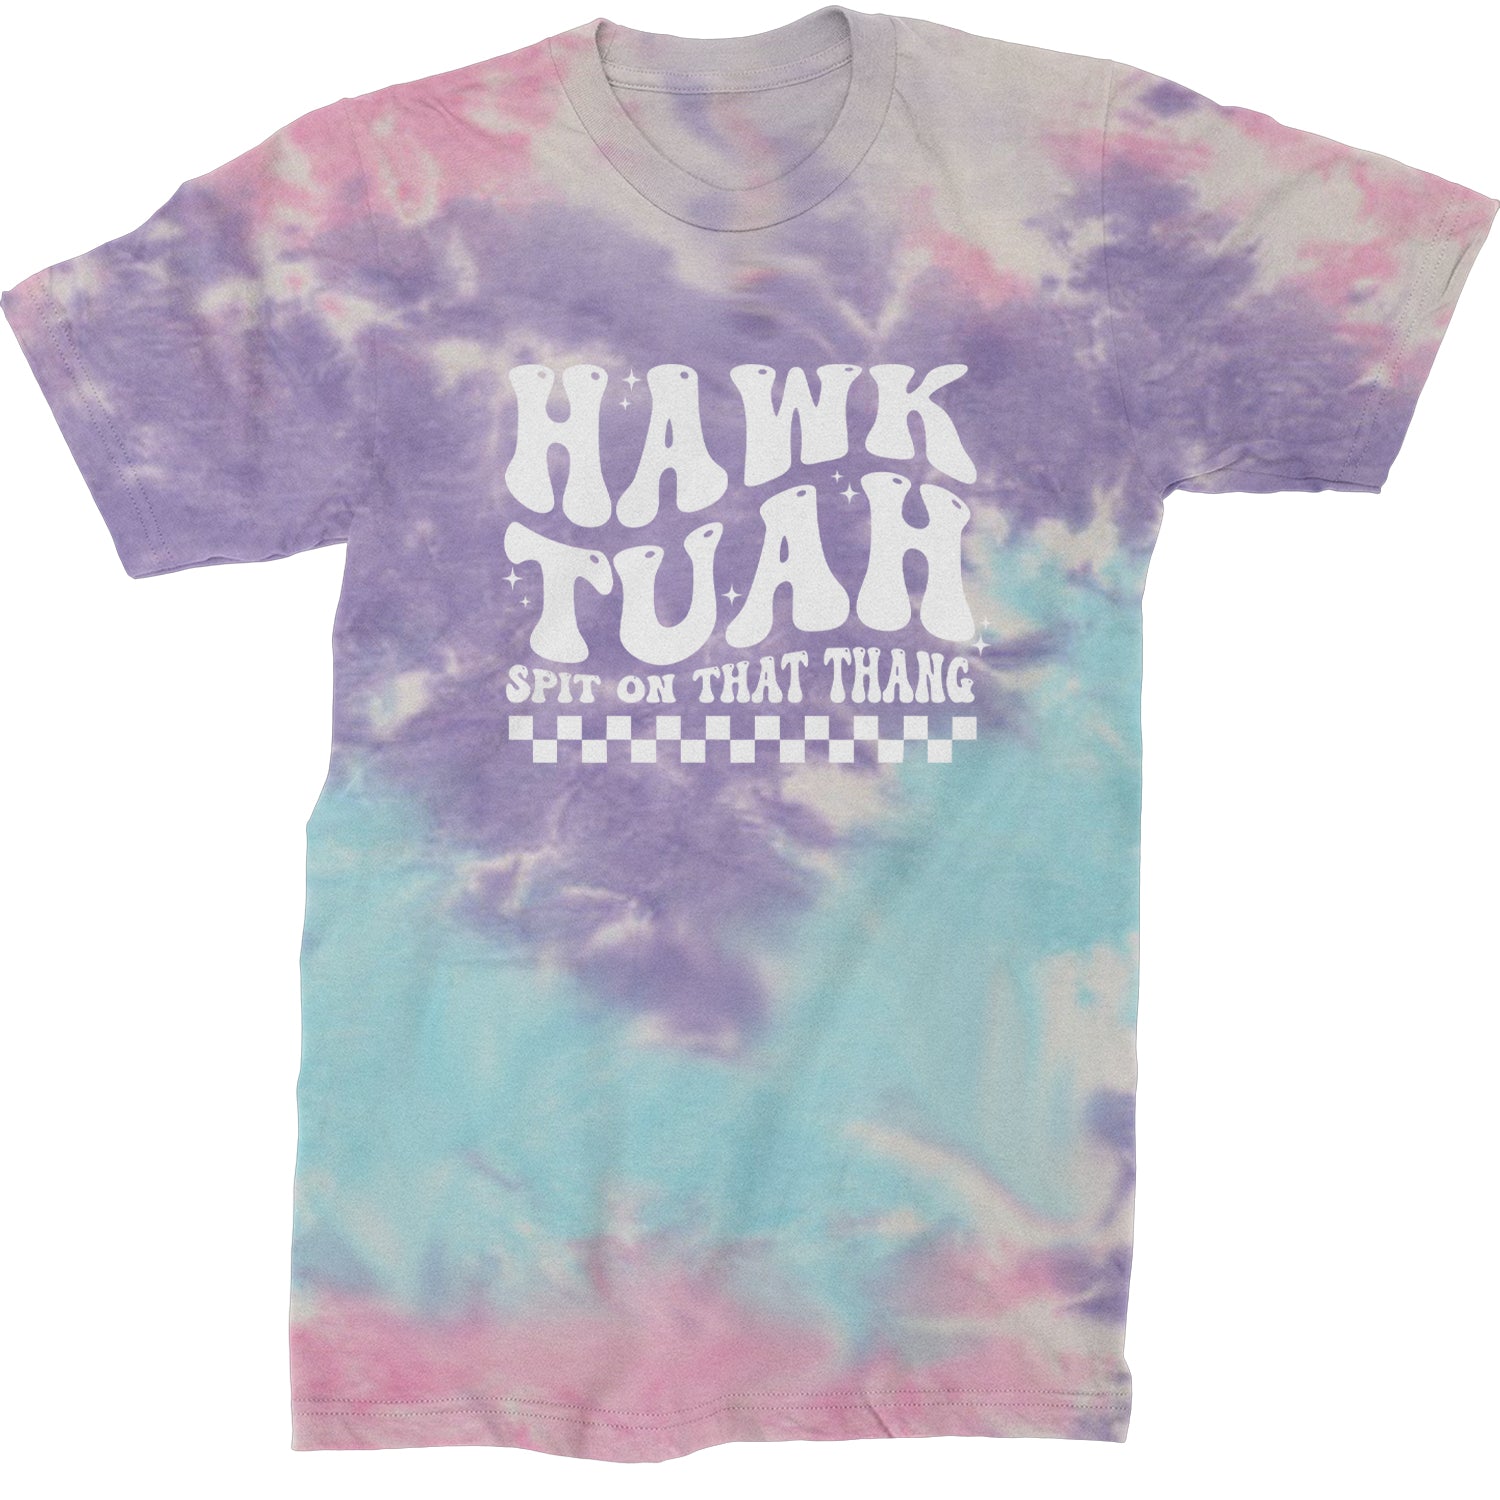 Hawk Tuah Spit On That Thang Mens T-shirt Tie-Dye Cotton Candy